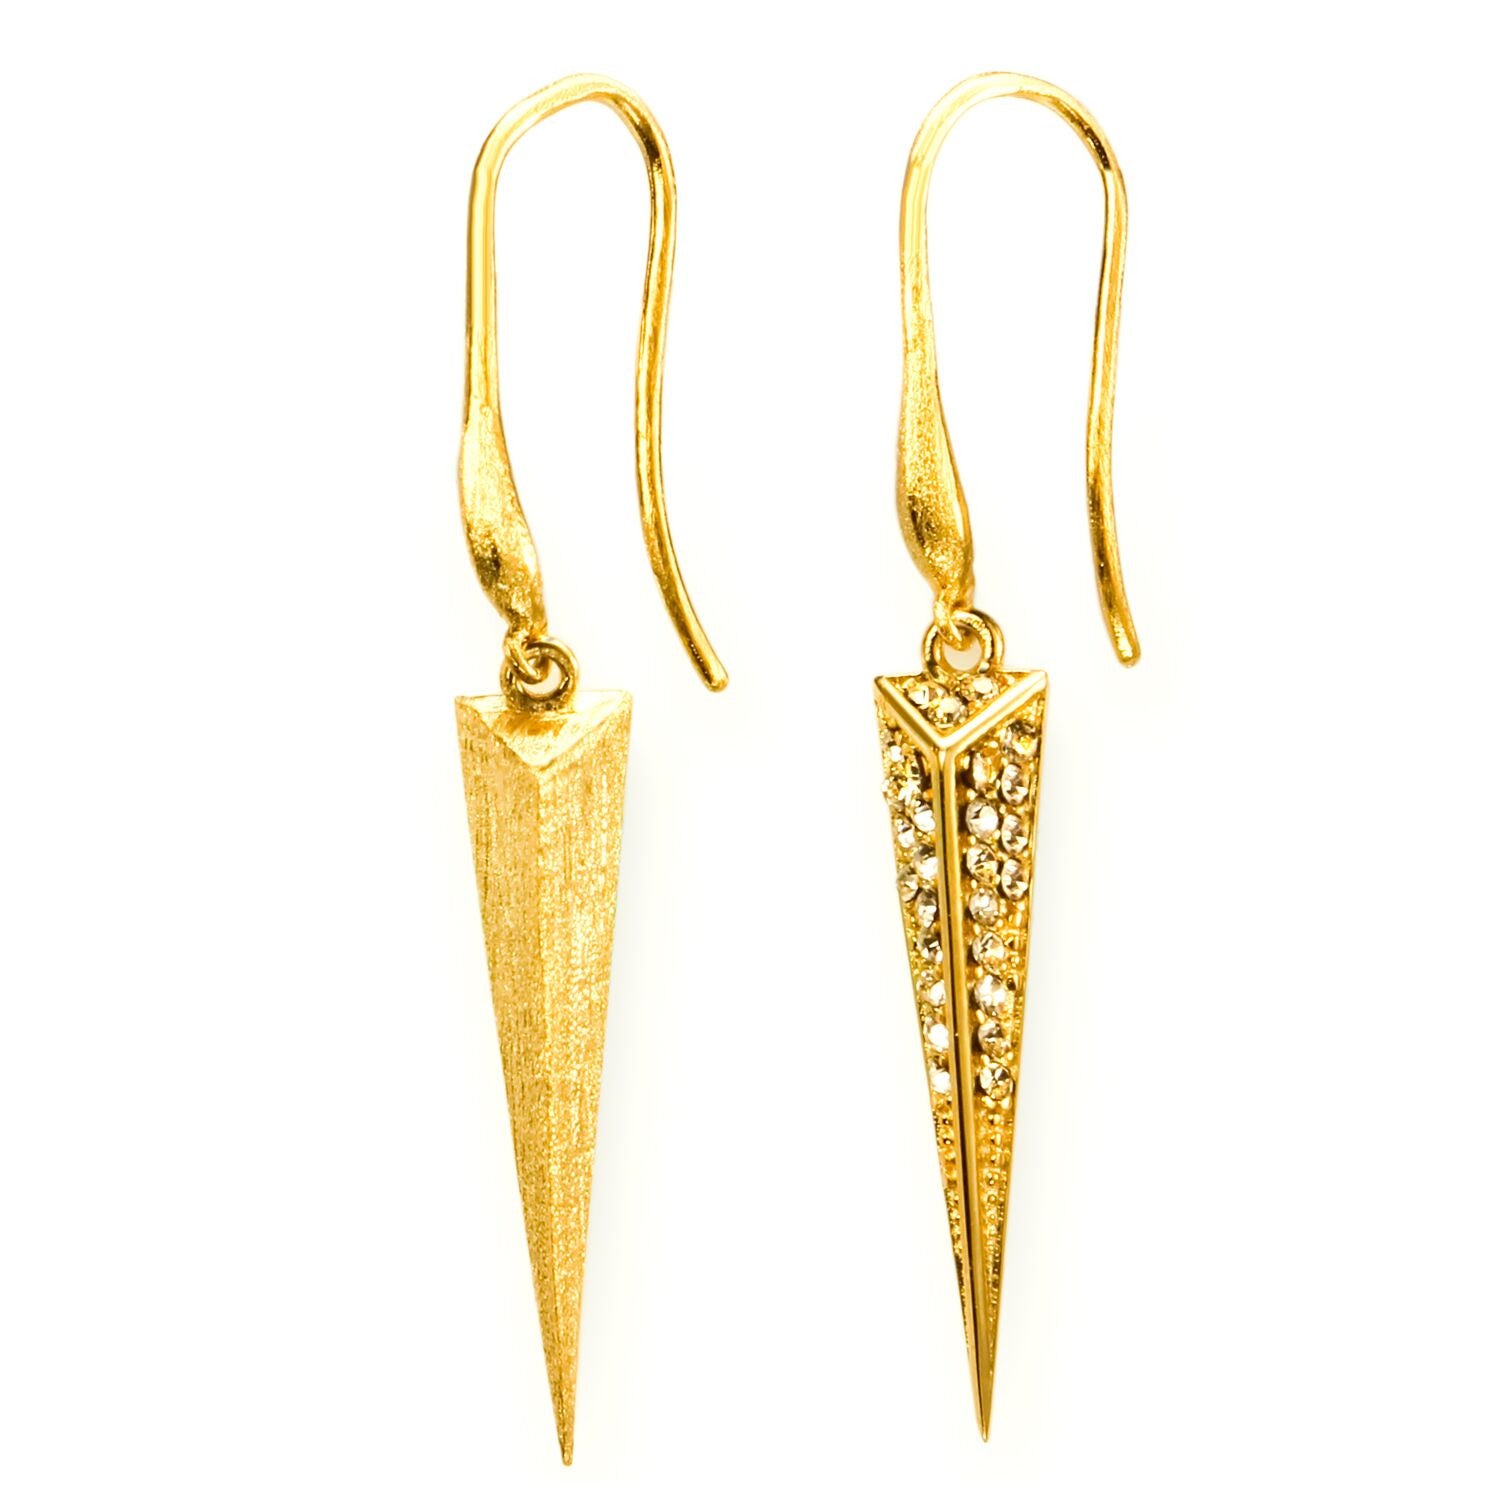 Mantra Dagger Drop Earrings, gold, Swarovski crystals